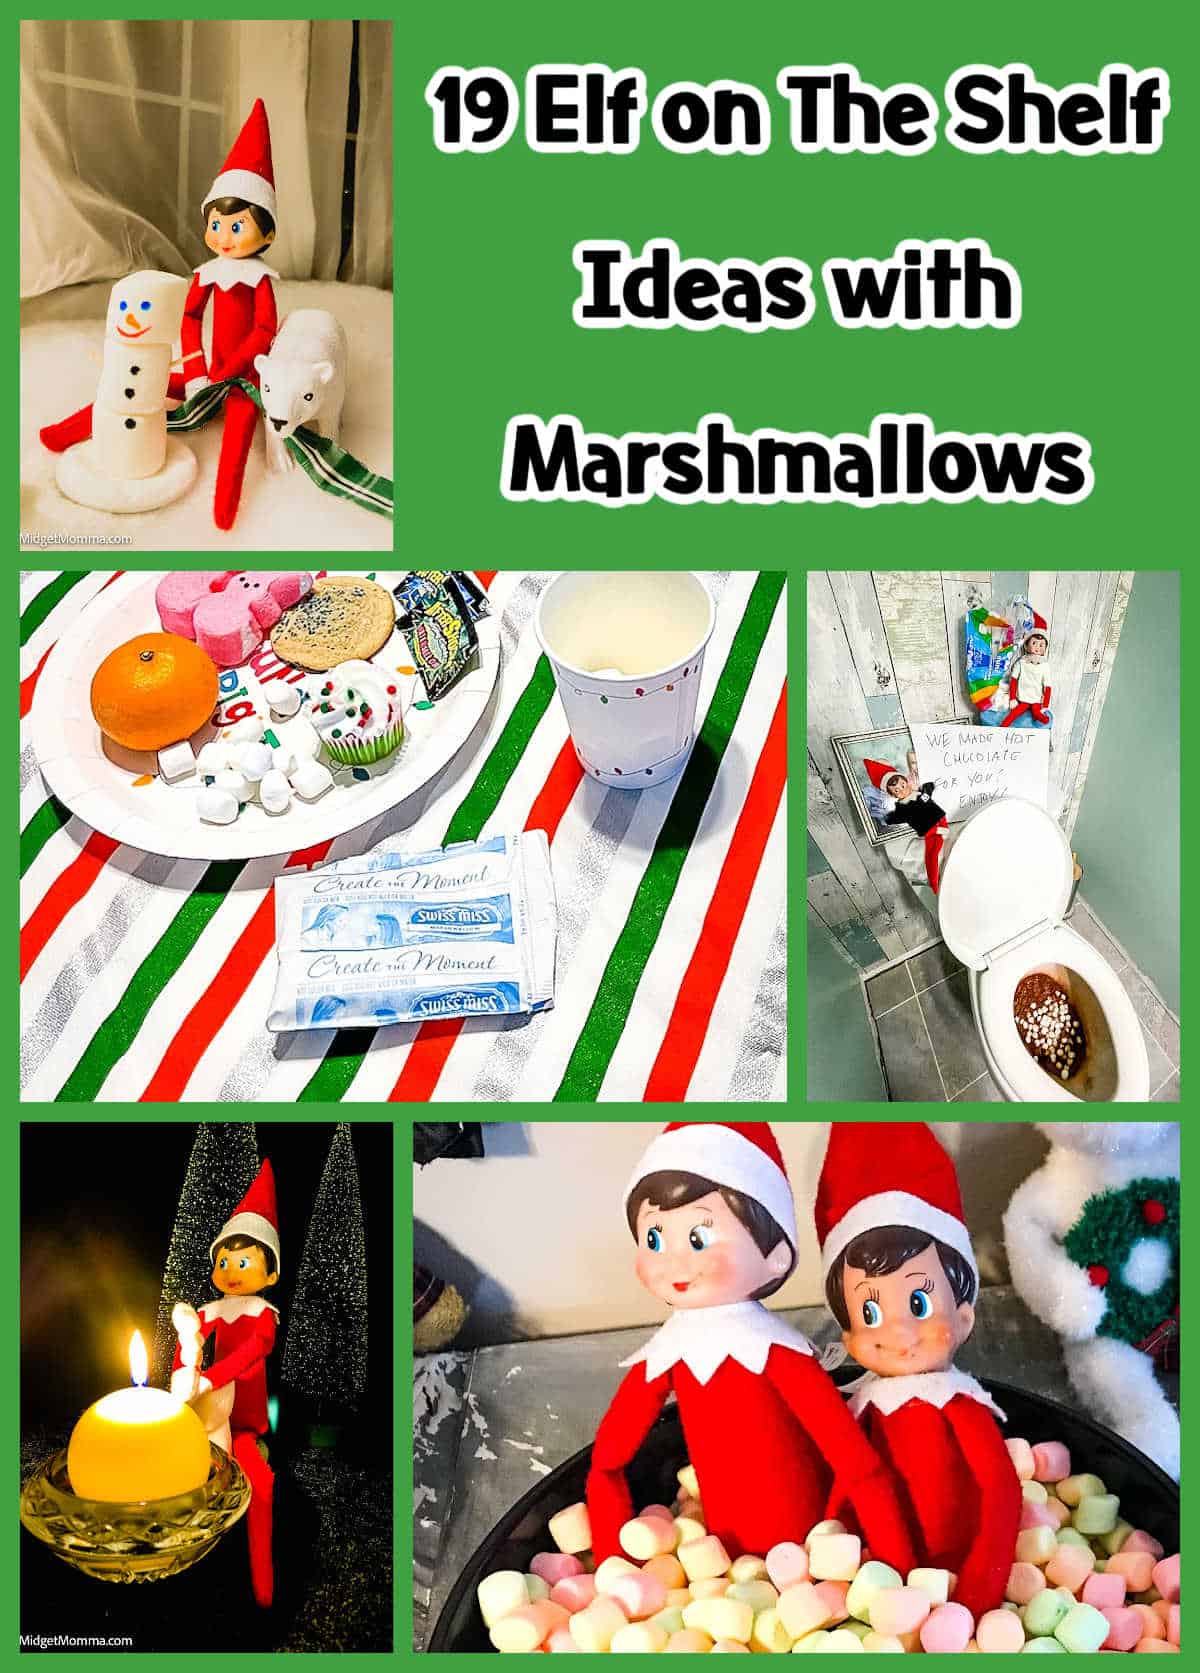 Elf on The Shelf Ideas with Marshmallows